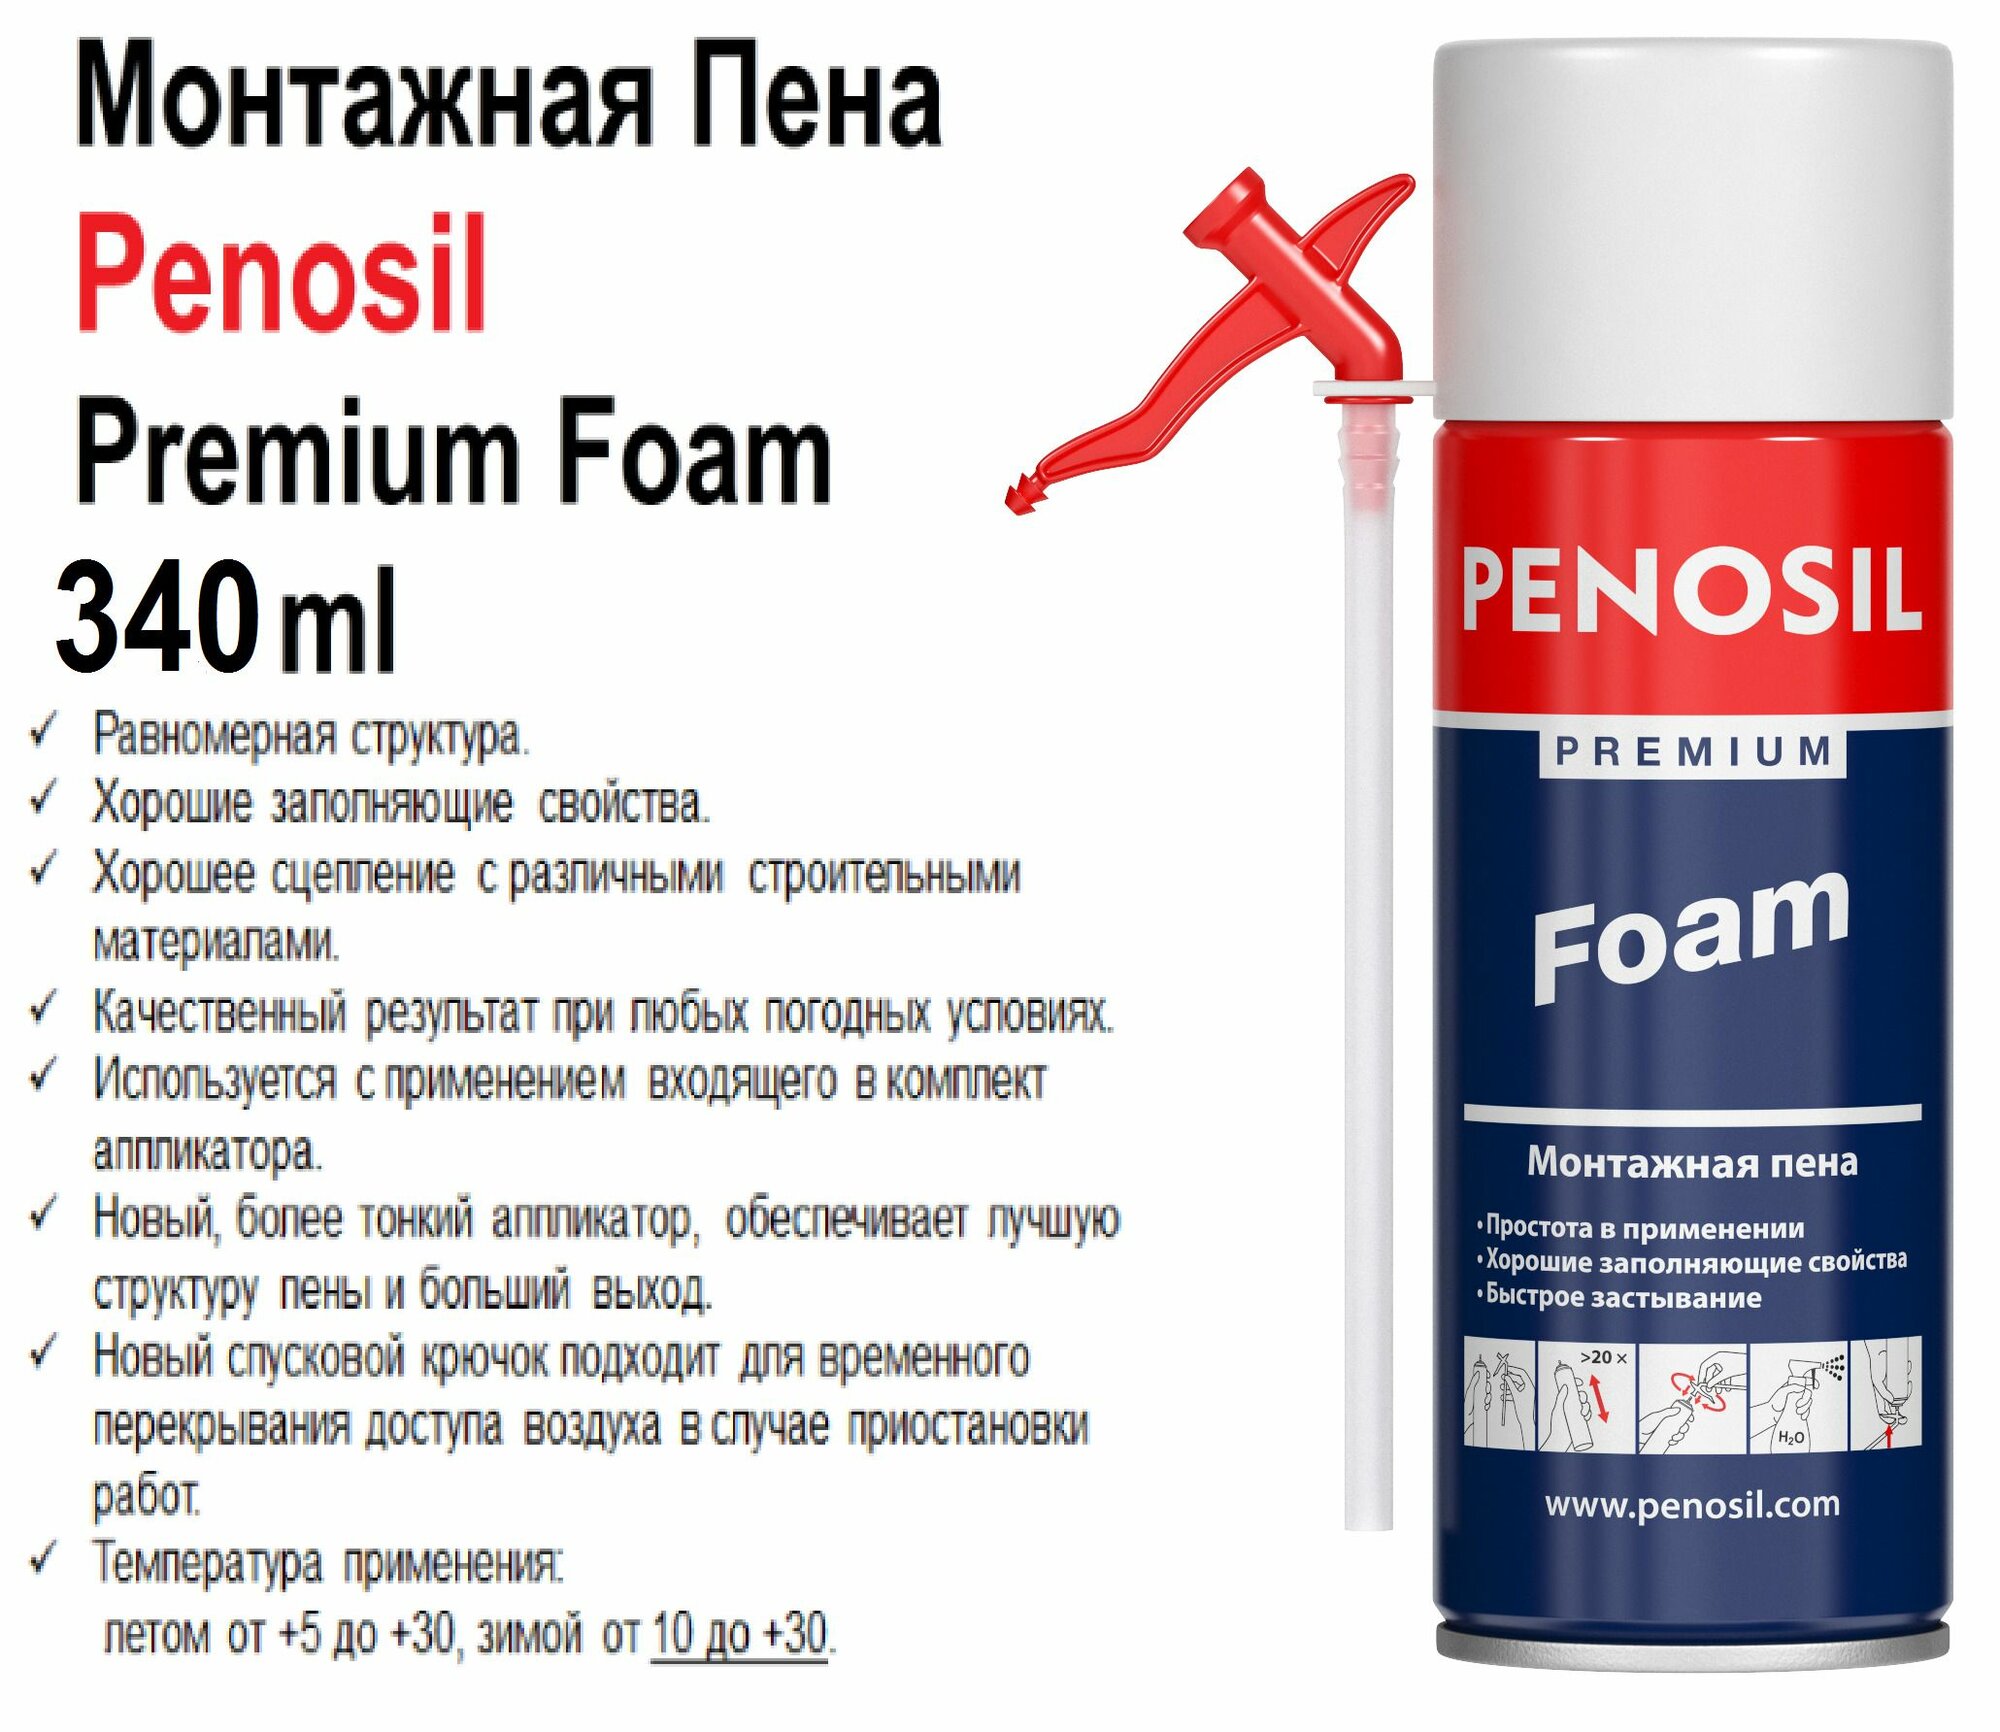 Пена монтажная Premium Foam 340мл "Пеносил"